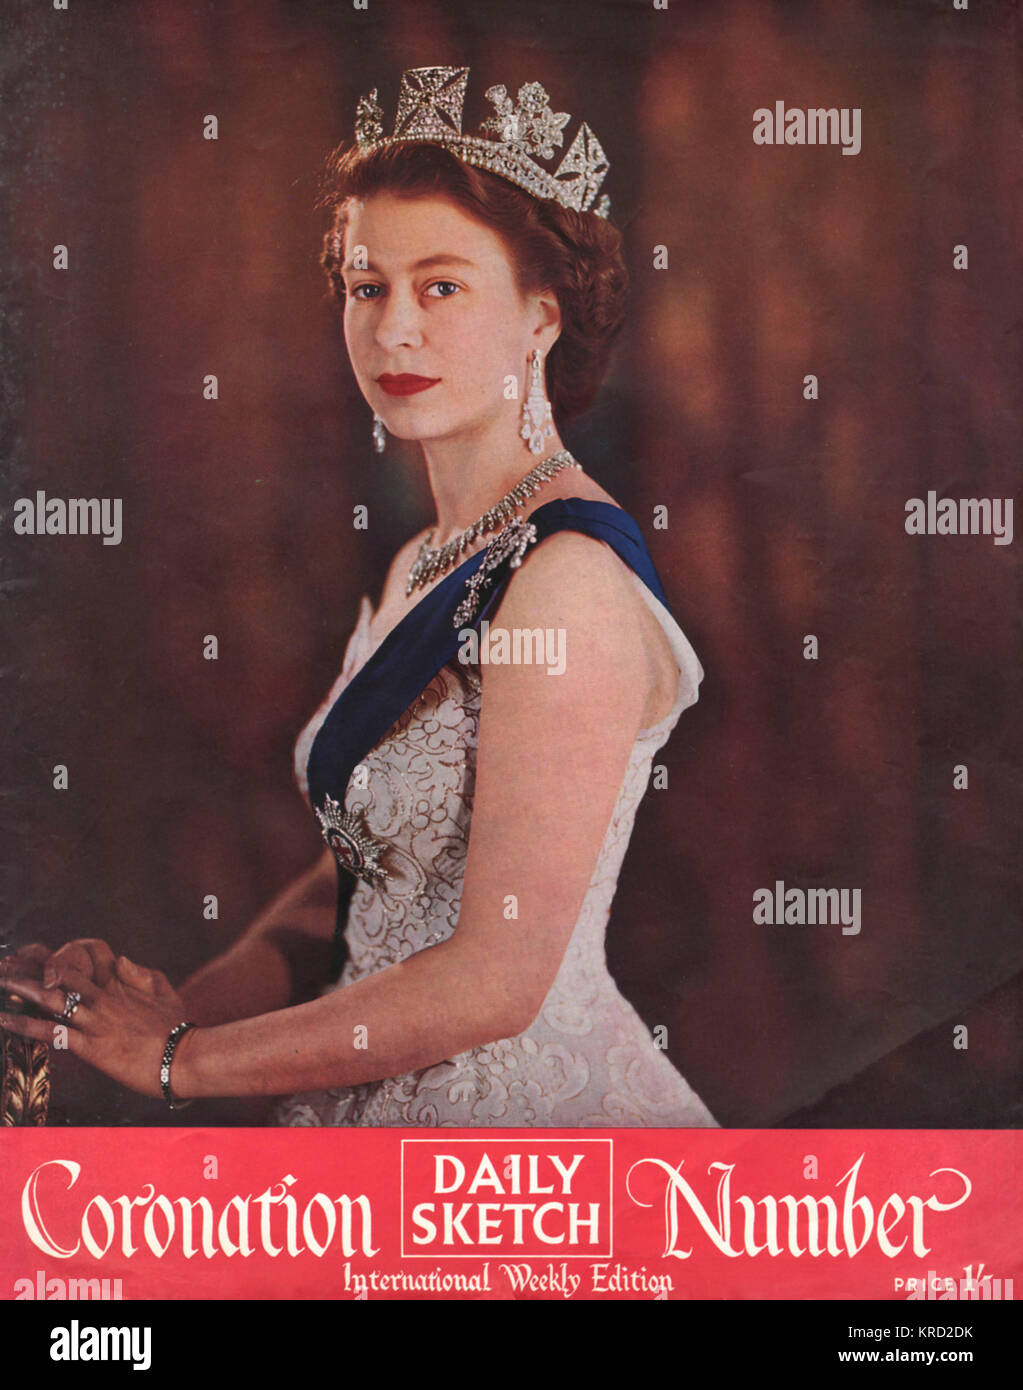 Queen Elizabeth Ii Coronation Portrait Hi Res Stock Photography And Images Alamy